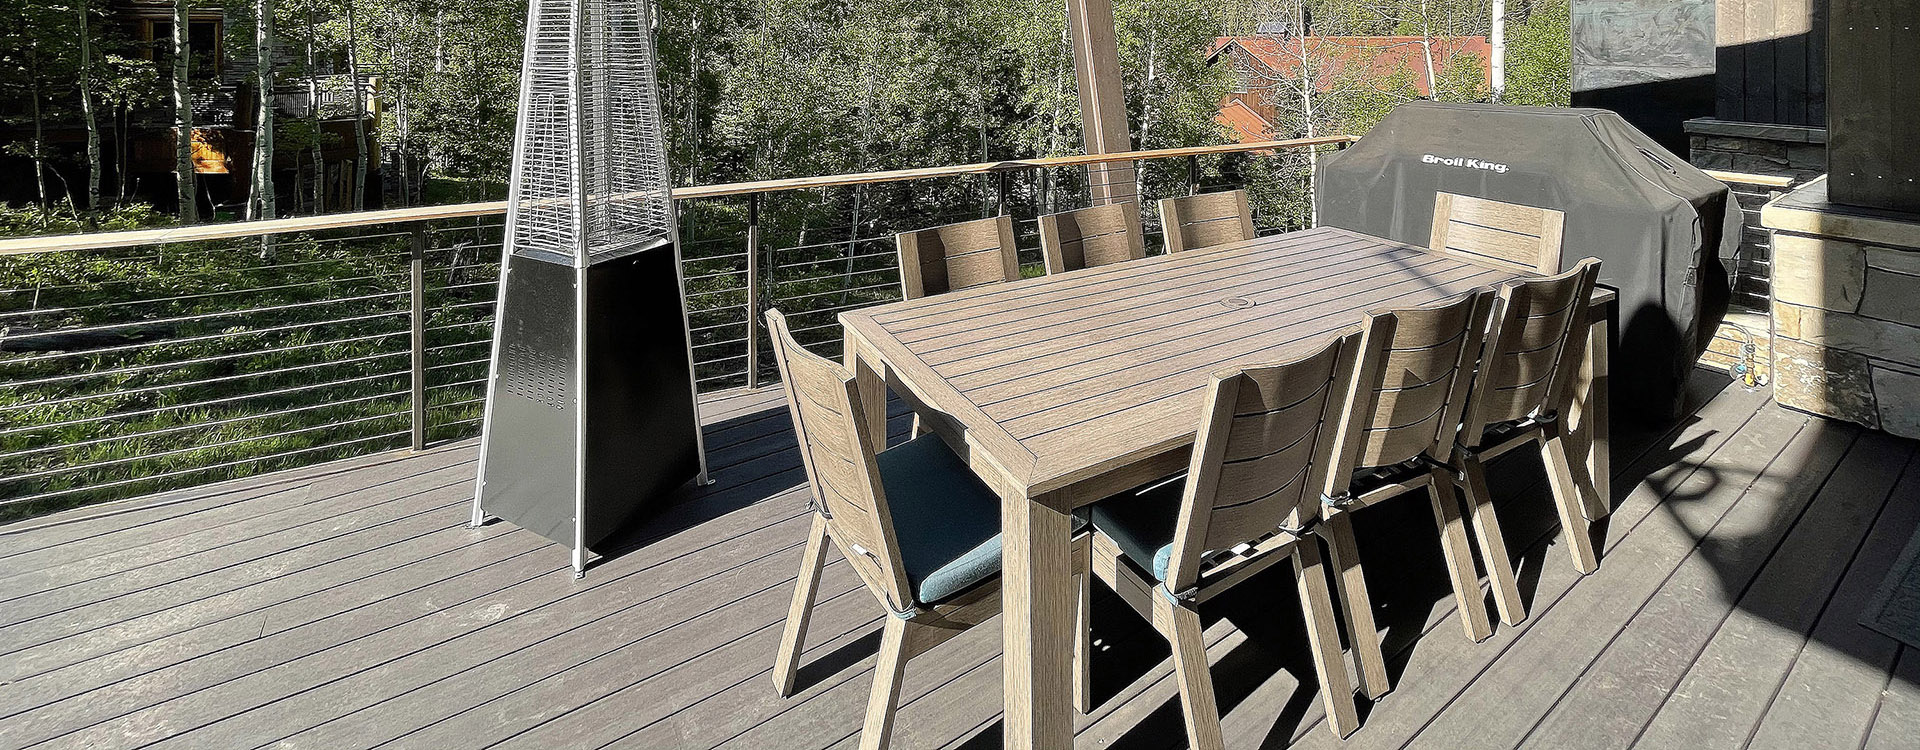 2.08-telluride-open-oasis-back-deck-table